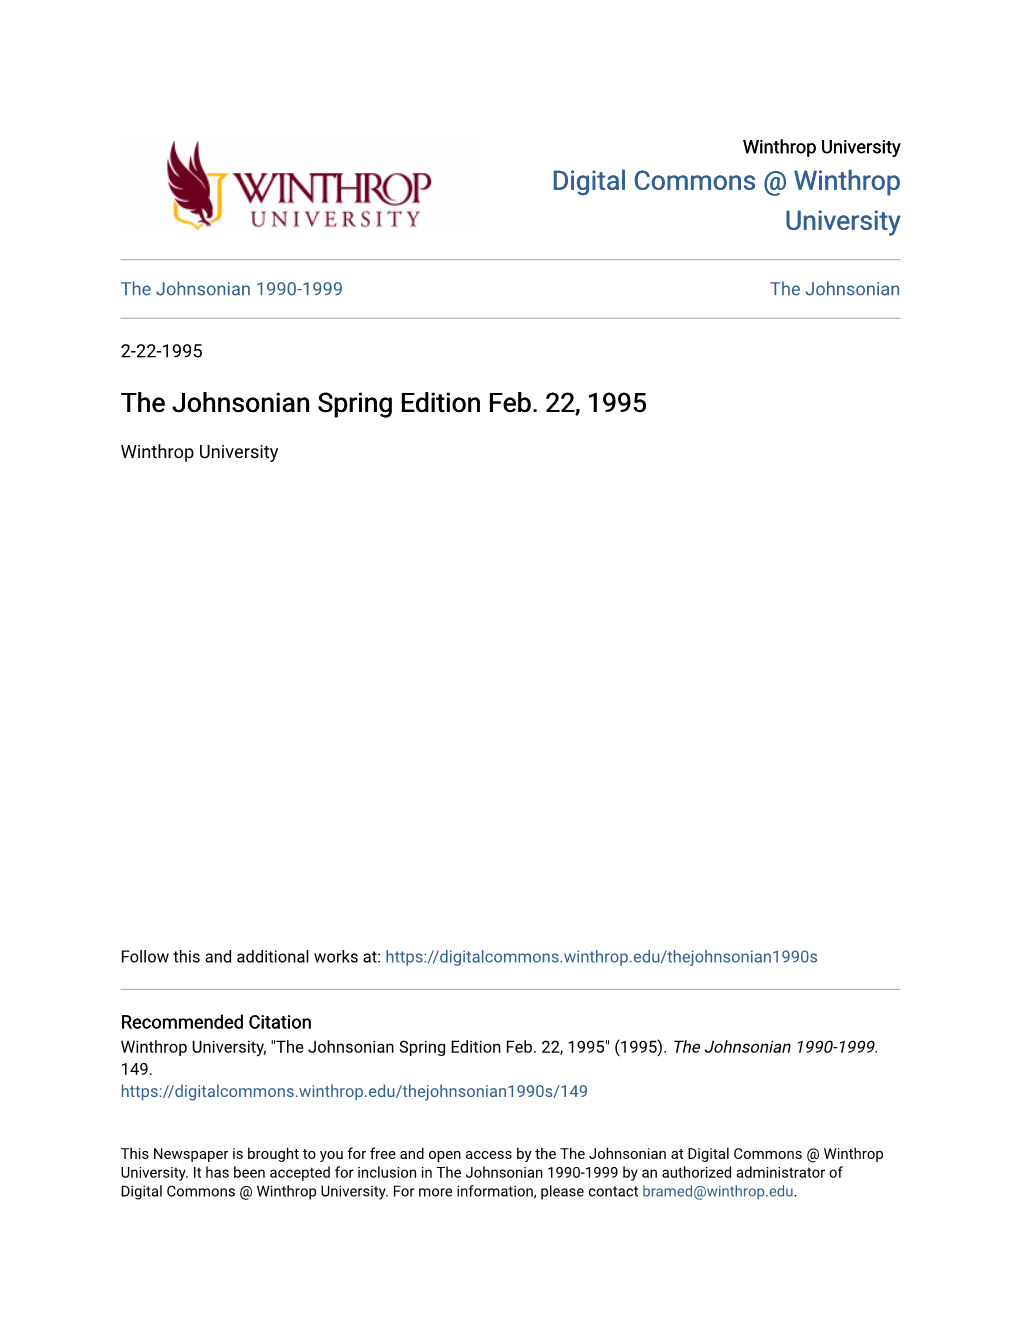 The Johnsonian Spring Edition Feb. 22, 1995